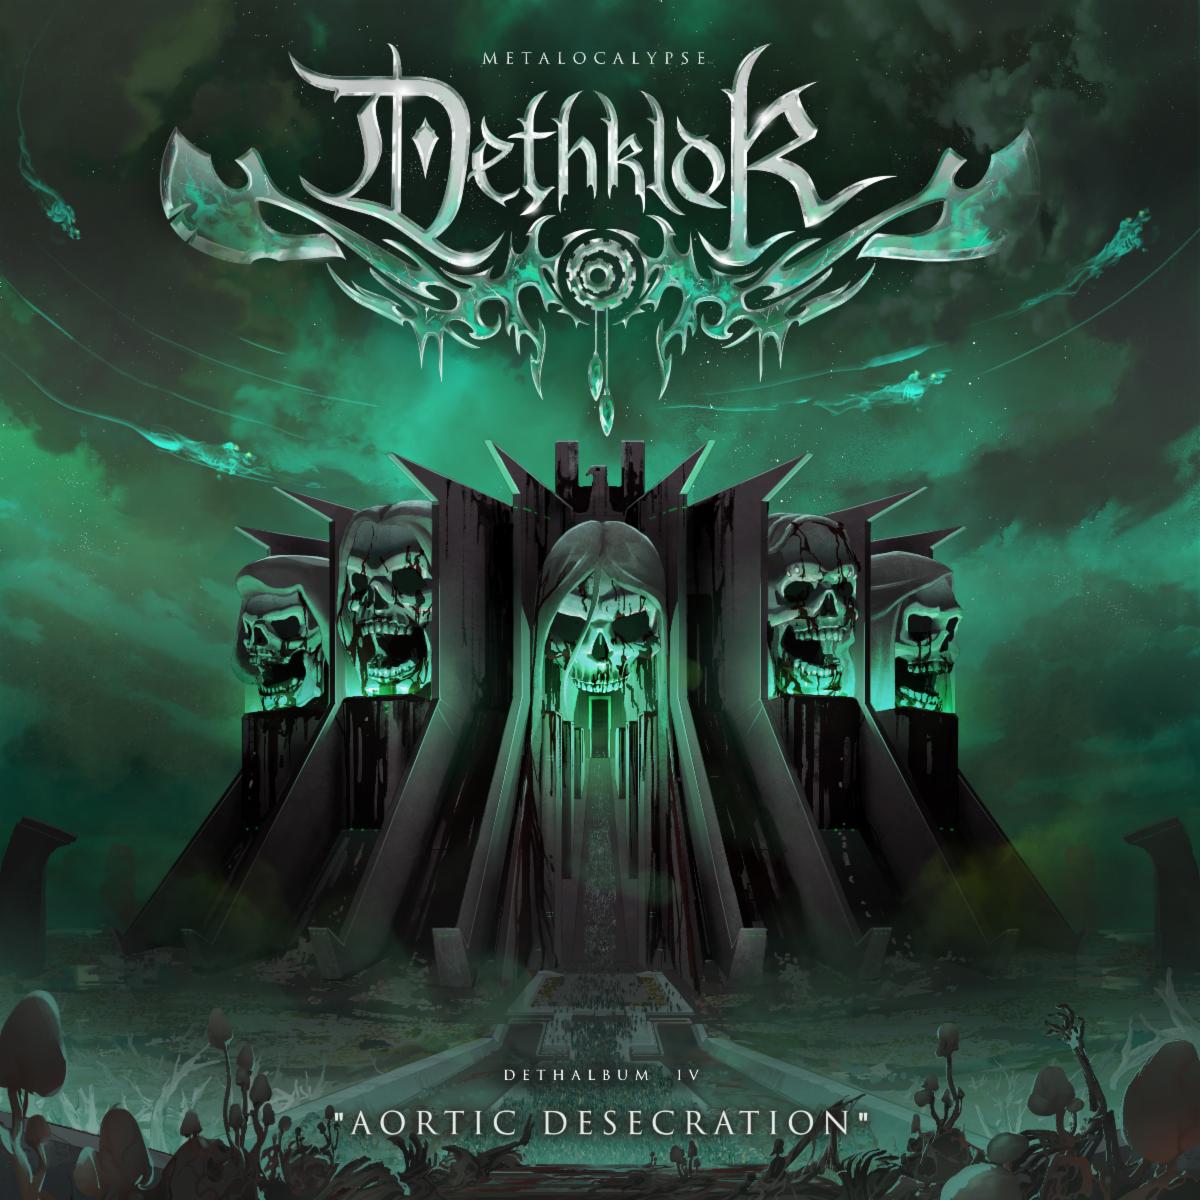 Dethklok's new album "Dethalbum IV" captures the essence of "Metalocalypse"